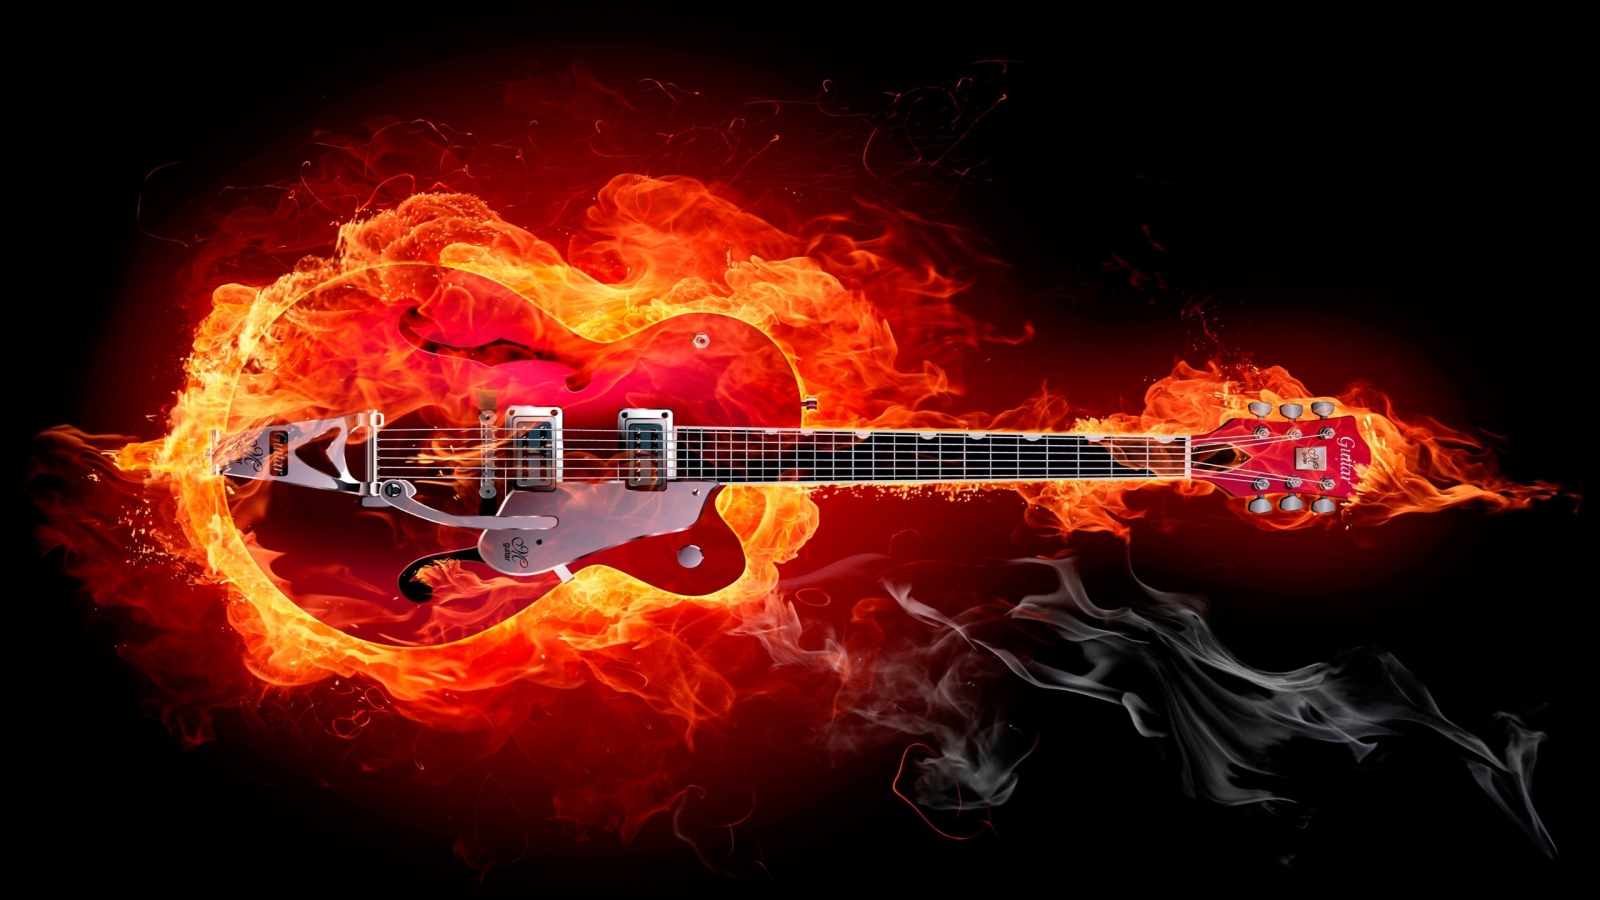 Fire Guitar for 1600 x 900 HDTV resolution